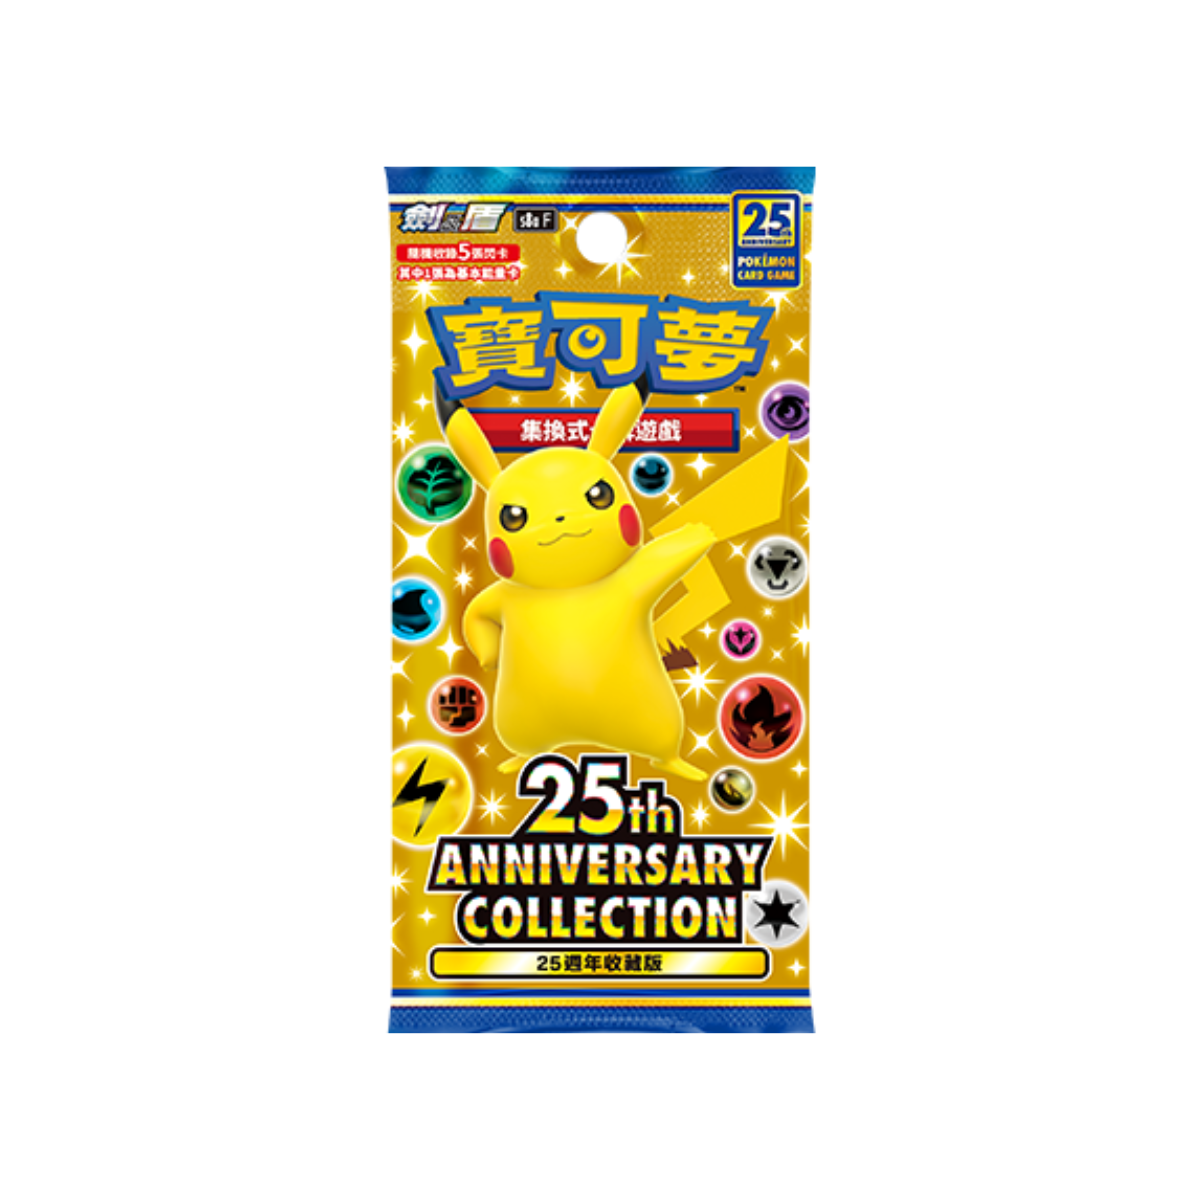 Pokemon TCG 剑 &amp; 盾 擴充包 25周年收藏款 [S8aF] (Chinese)-Single Pack (Random)-The Pokémon Company International-Ace Cards &amp; Collectibles